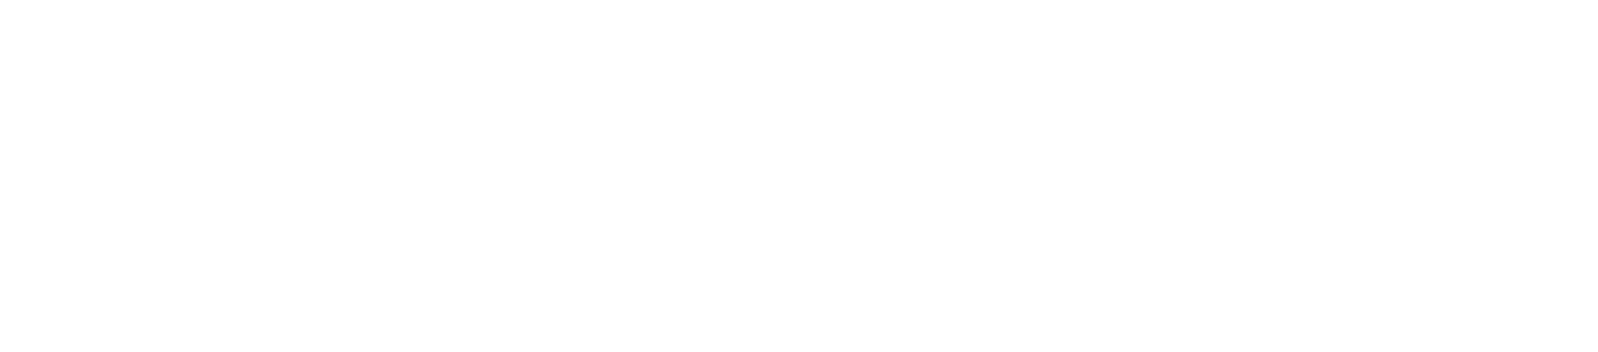 Old Mutual Logo groß für dunkle Hintergründe (transparentes PNG)